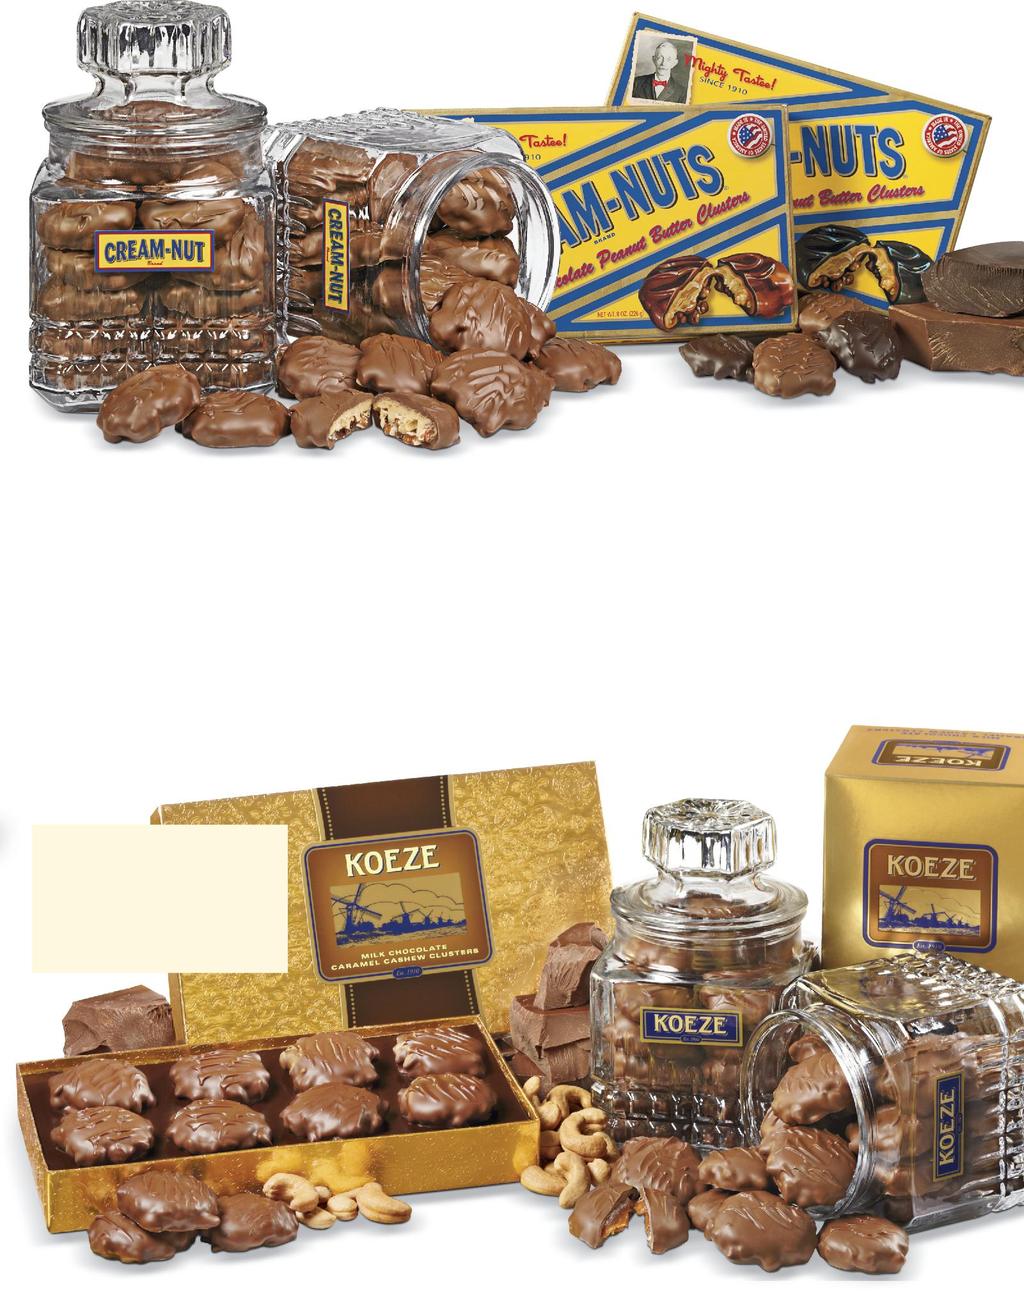 CREAM-NUT PEANUT BUTTER CLUSTERS Albertus Koeze began making famous Cream-Nut Brand Peanut Butter in 1925.